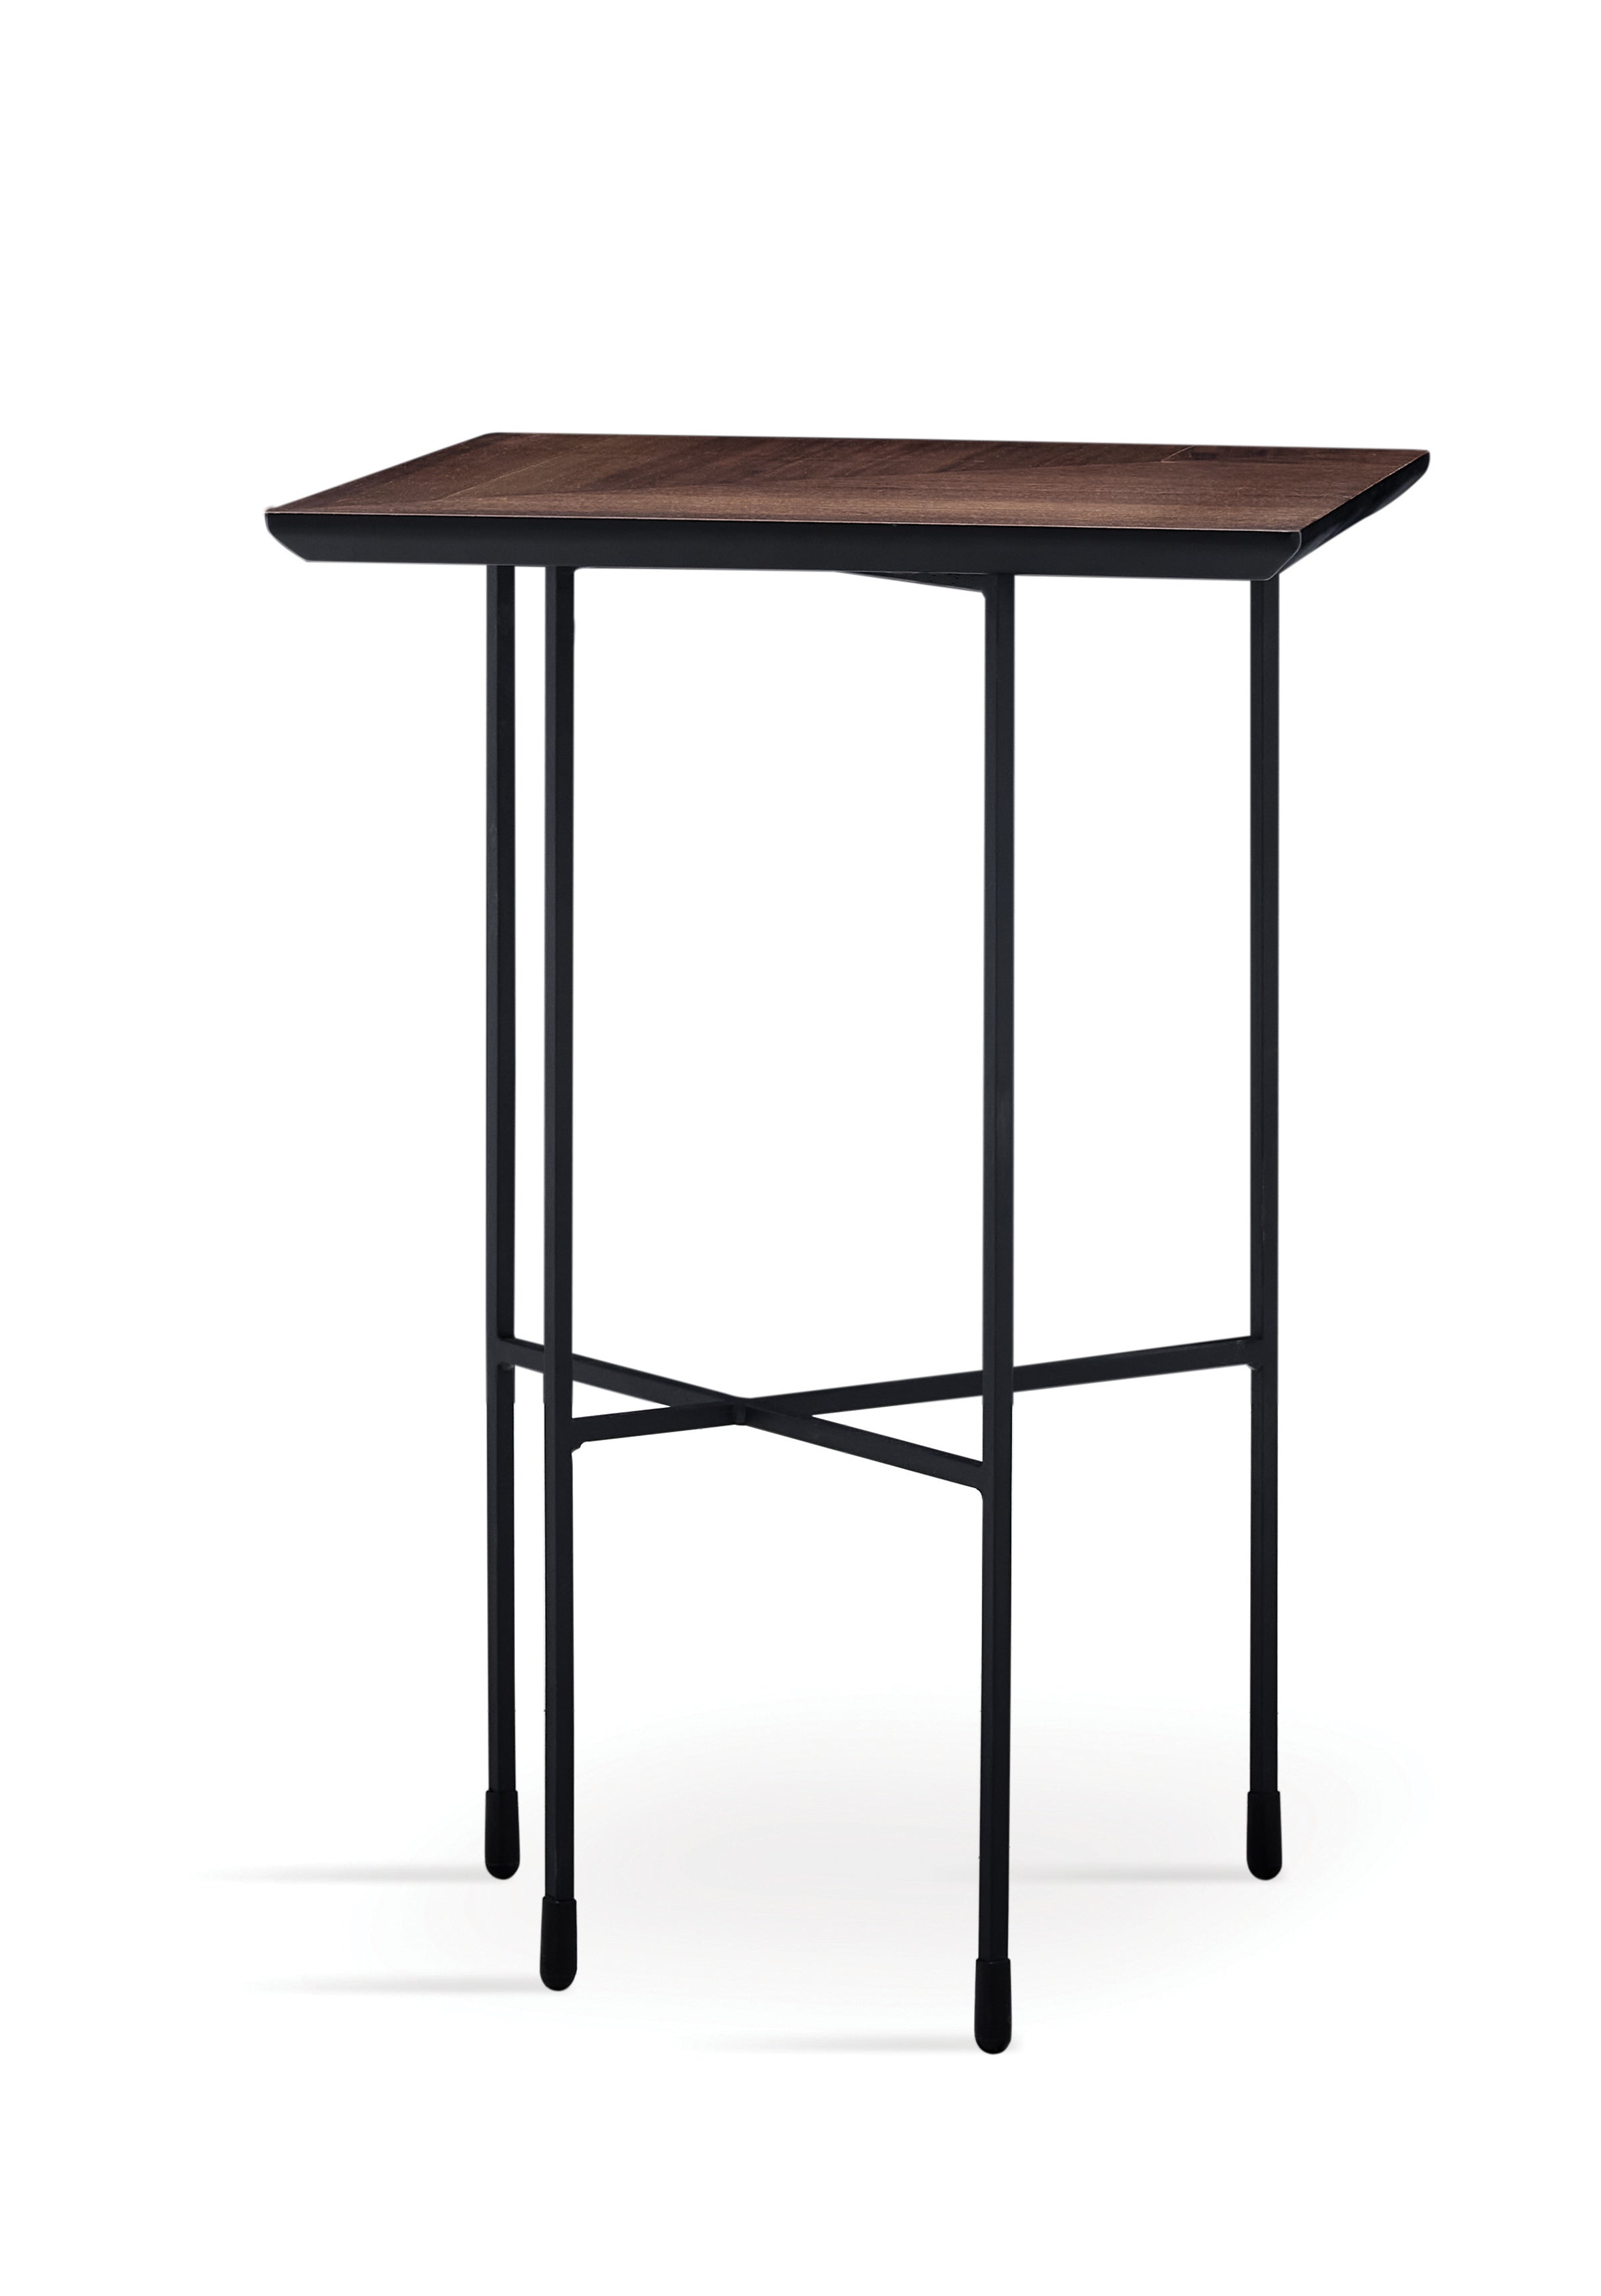 Solaro - Side Table (Walnut) - 47835